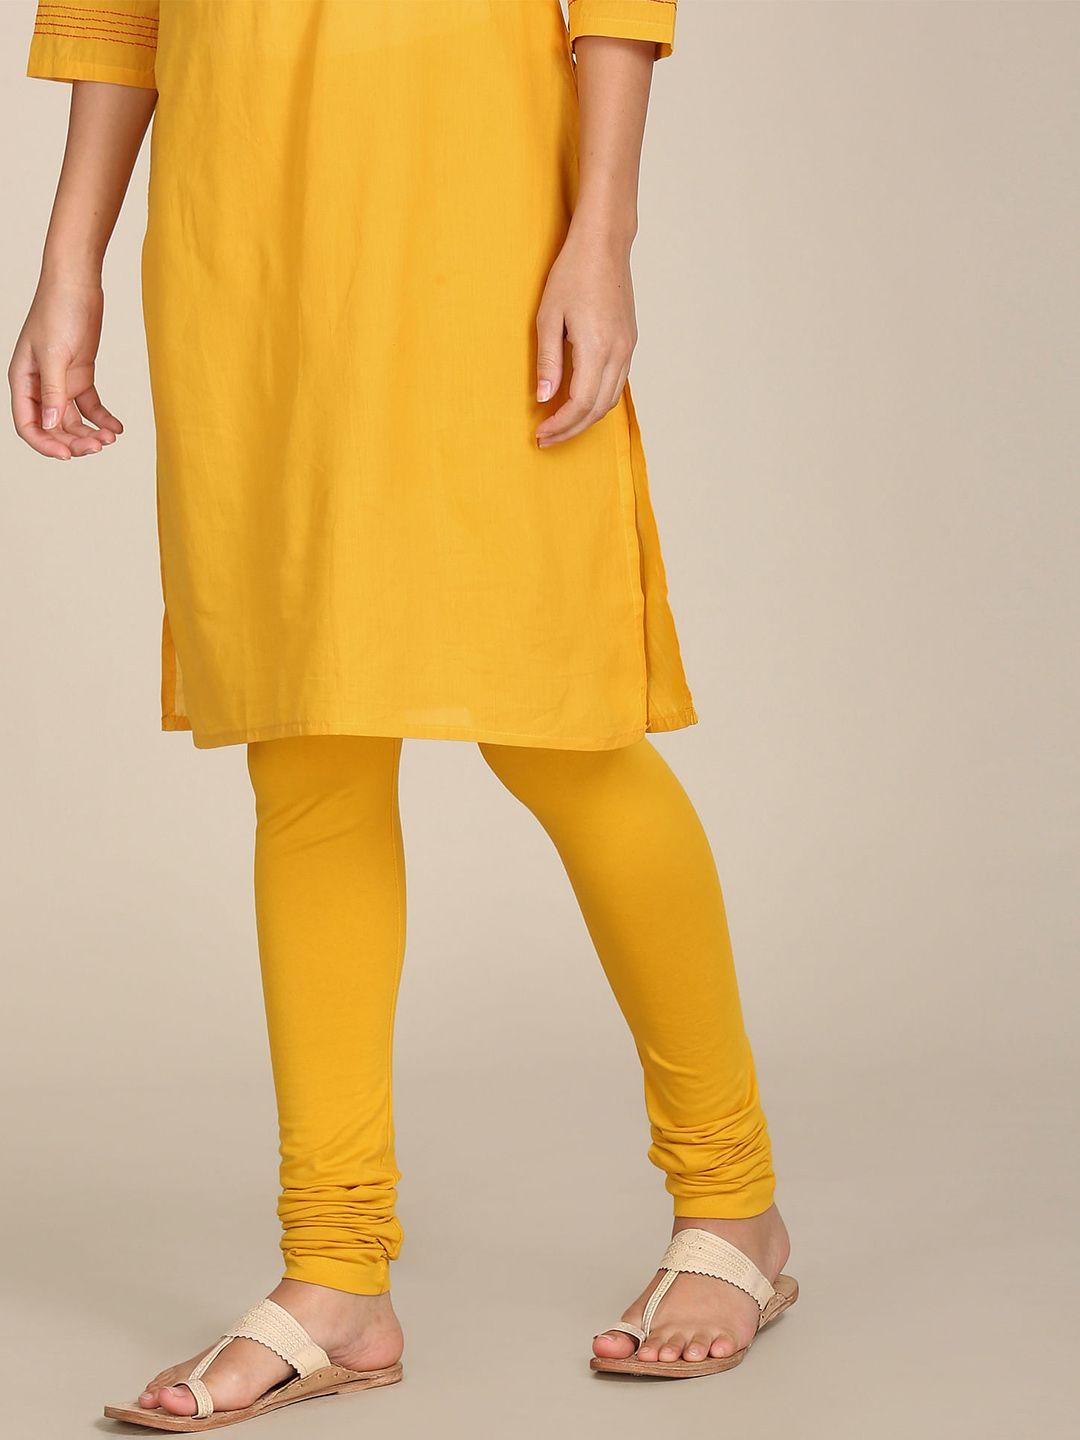 karigari-mustard-yellow-churidar-leggings